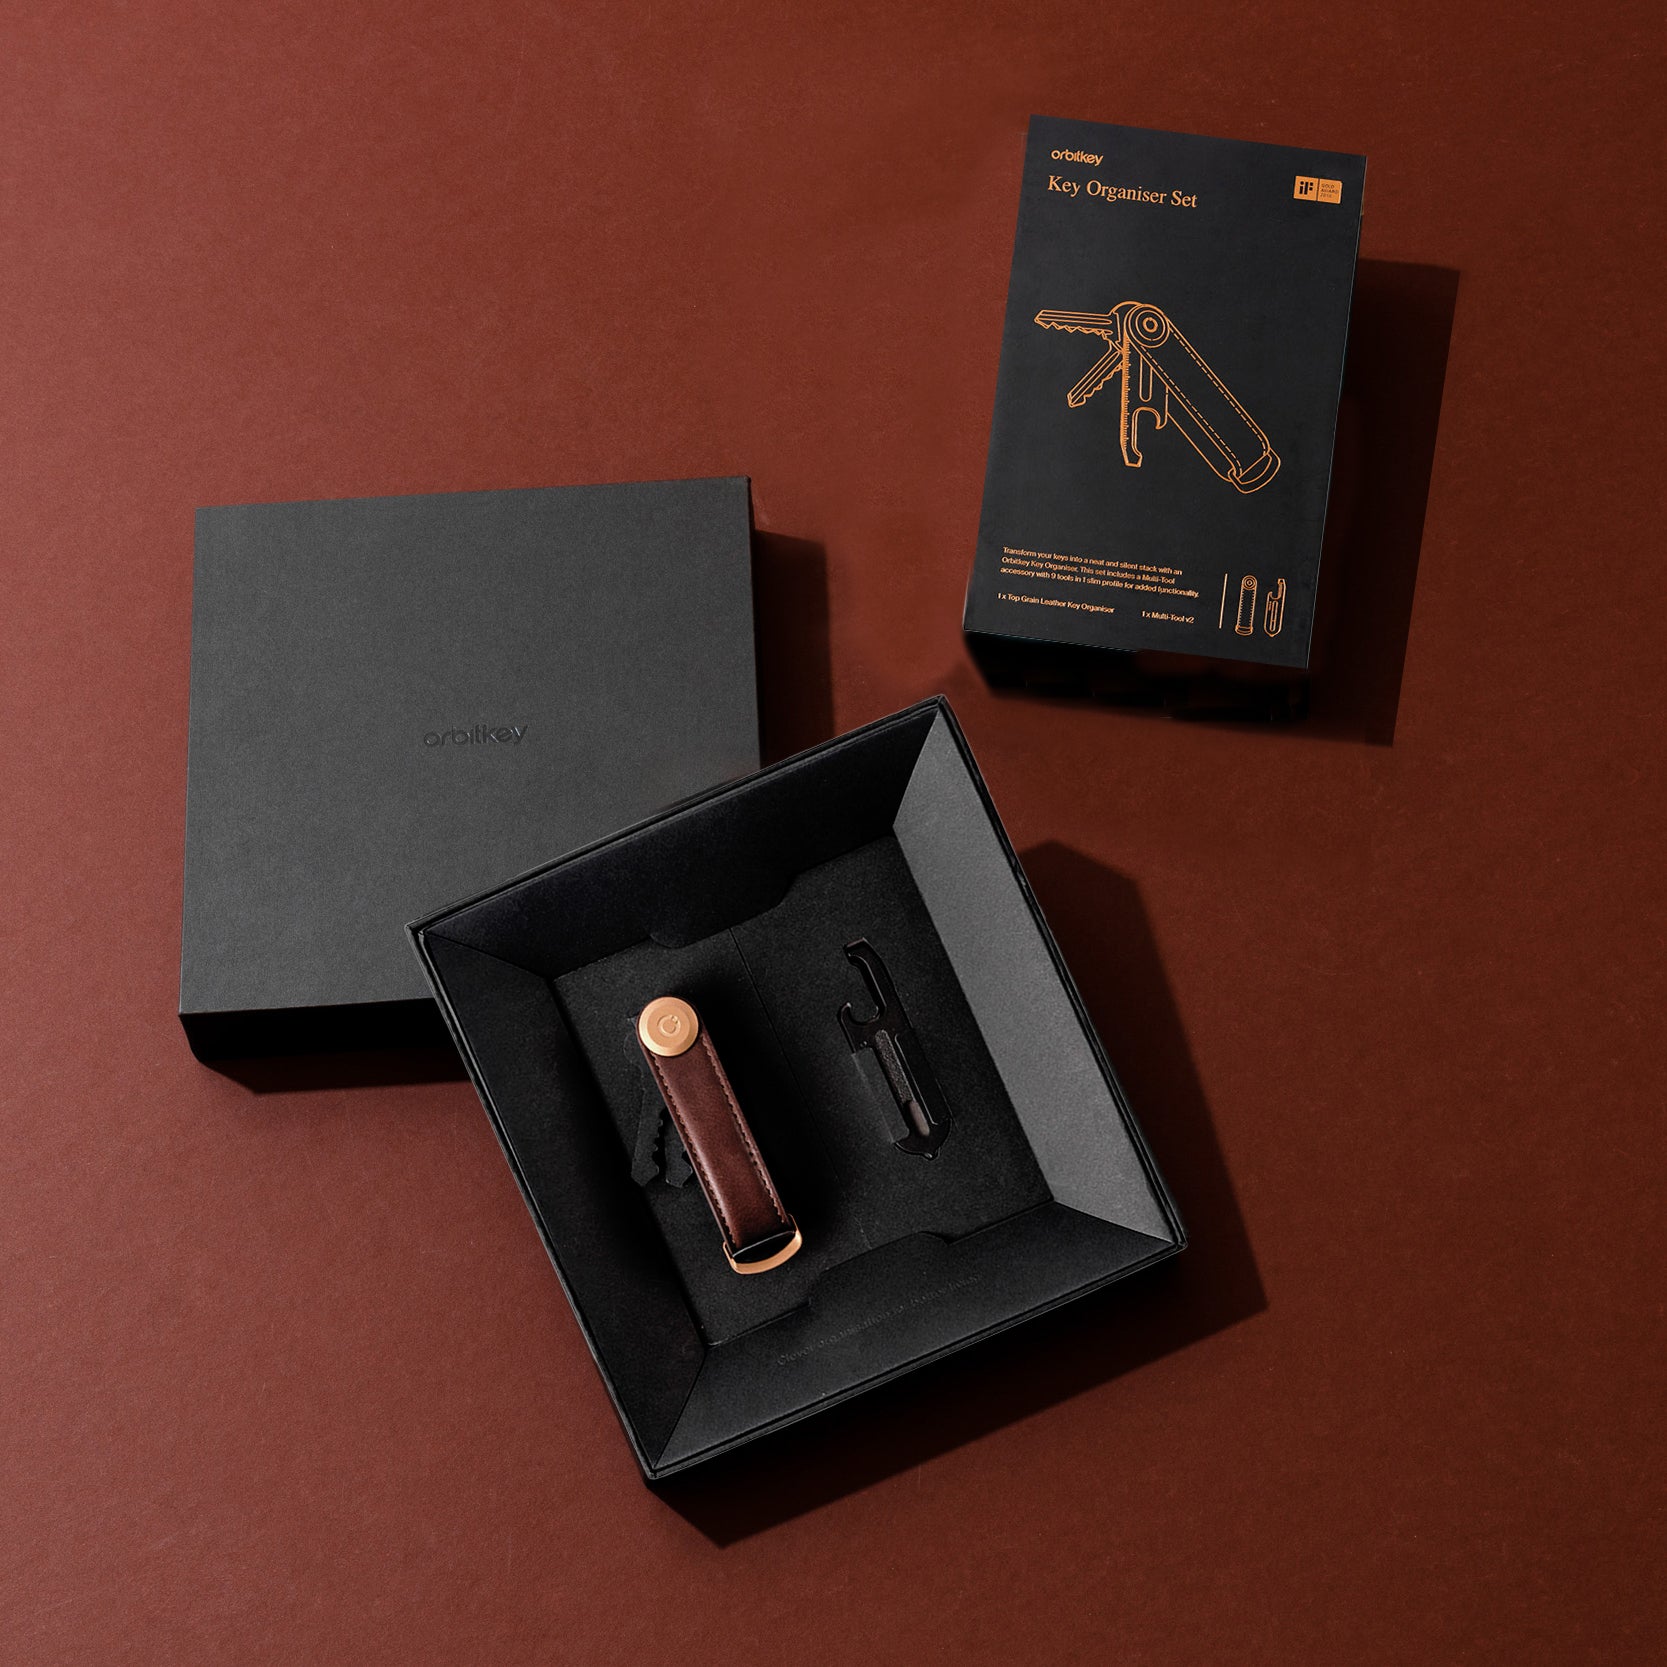 Orbit Key Gift Set Espresso Brown│Key Organizer en Multitool│Sleutelhanger art. GLT2-ESB-201│verpakking geopend met bruine ondergrond